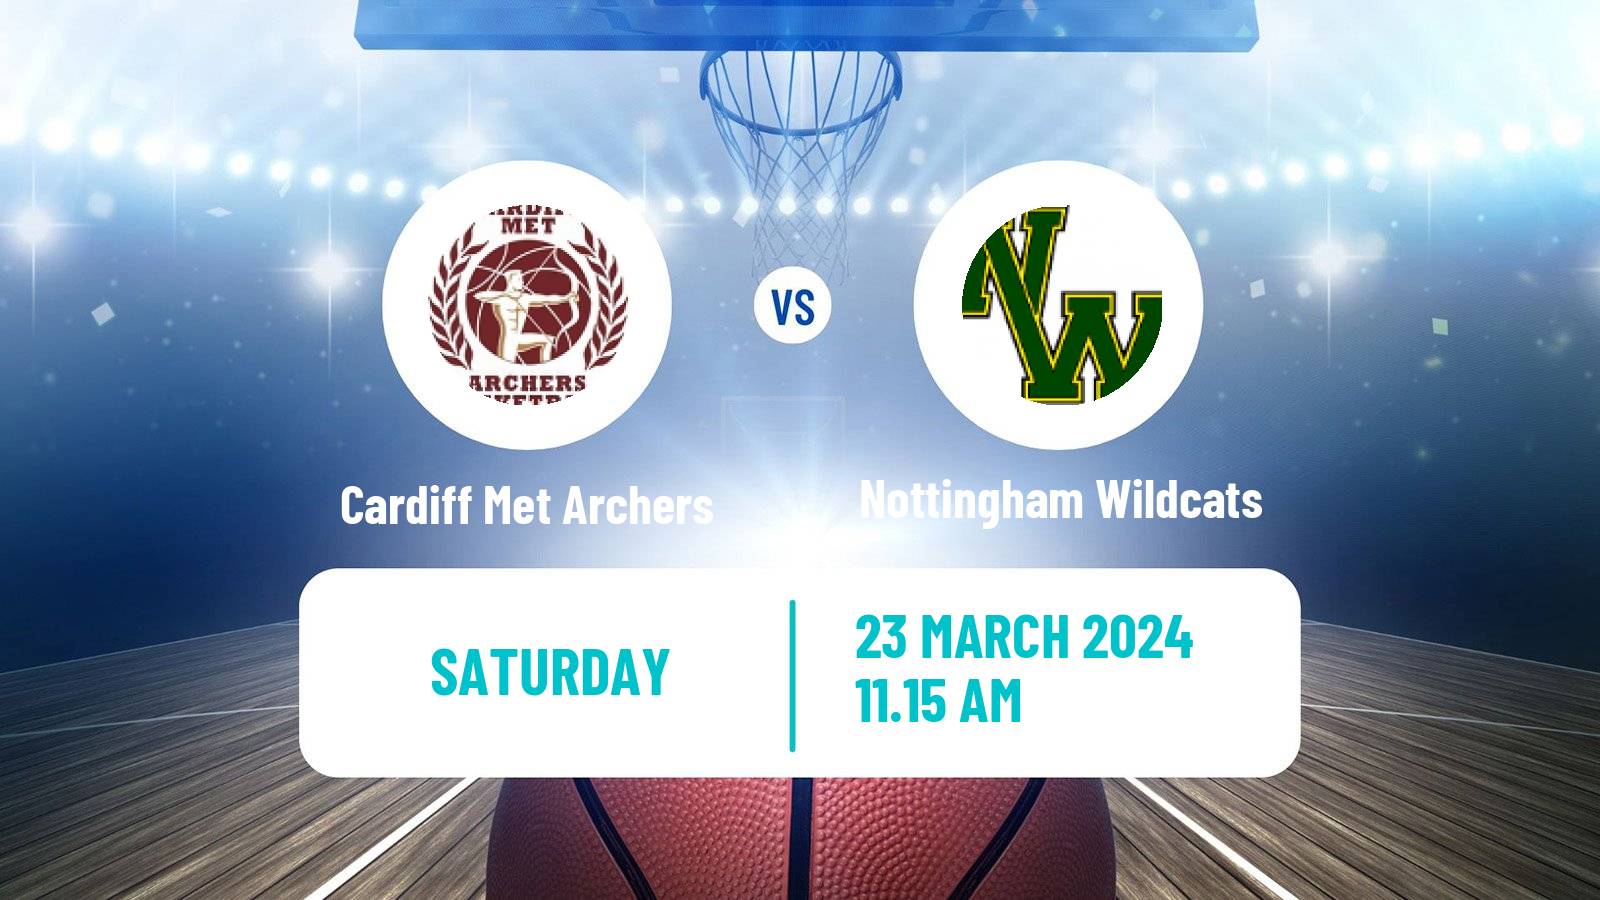 Basketball British WBBL Cardiff Met Archers - Nottingham Wildcats